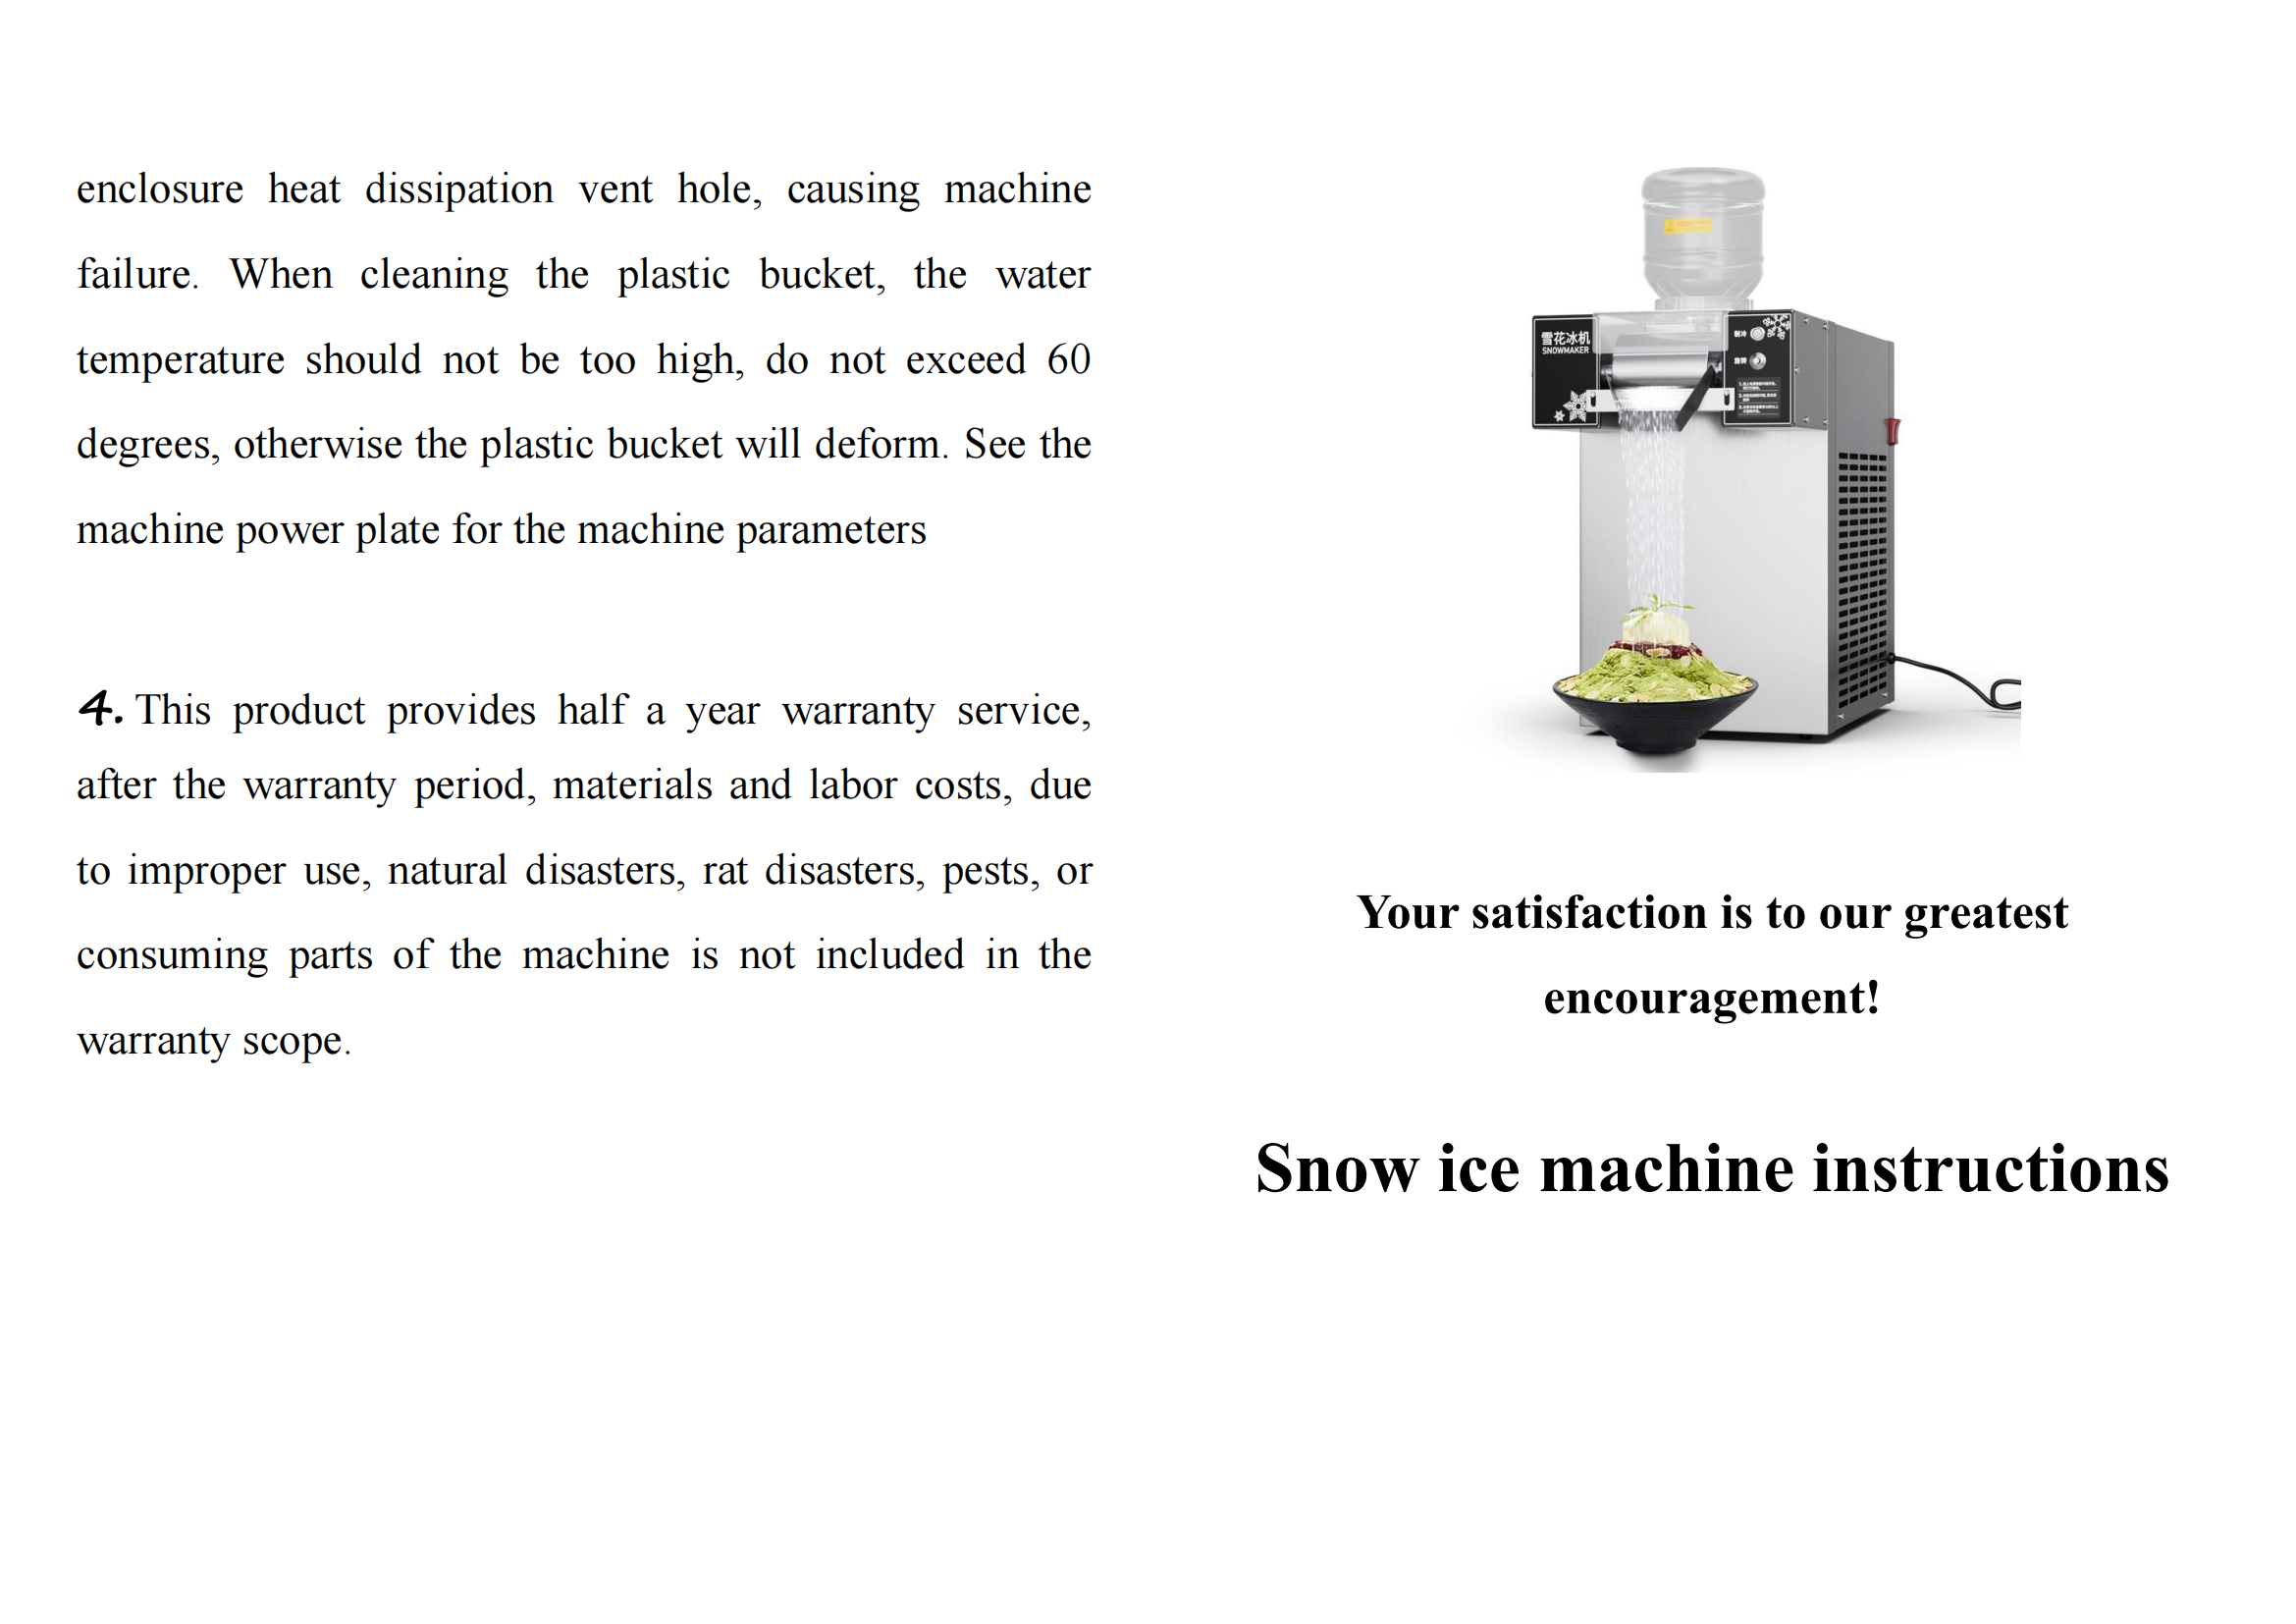 Good Quality Snowflake Ice Making Machine Wholesale Price Ice Making Machine from China Supplier - Snowflake Machine - 2